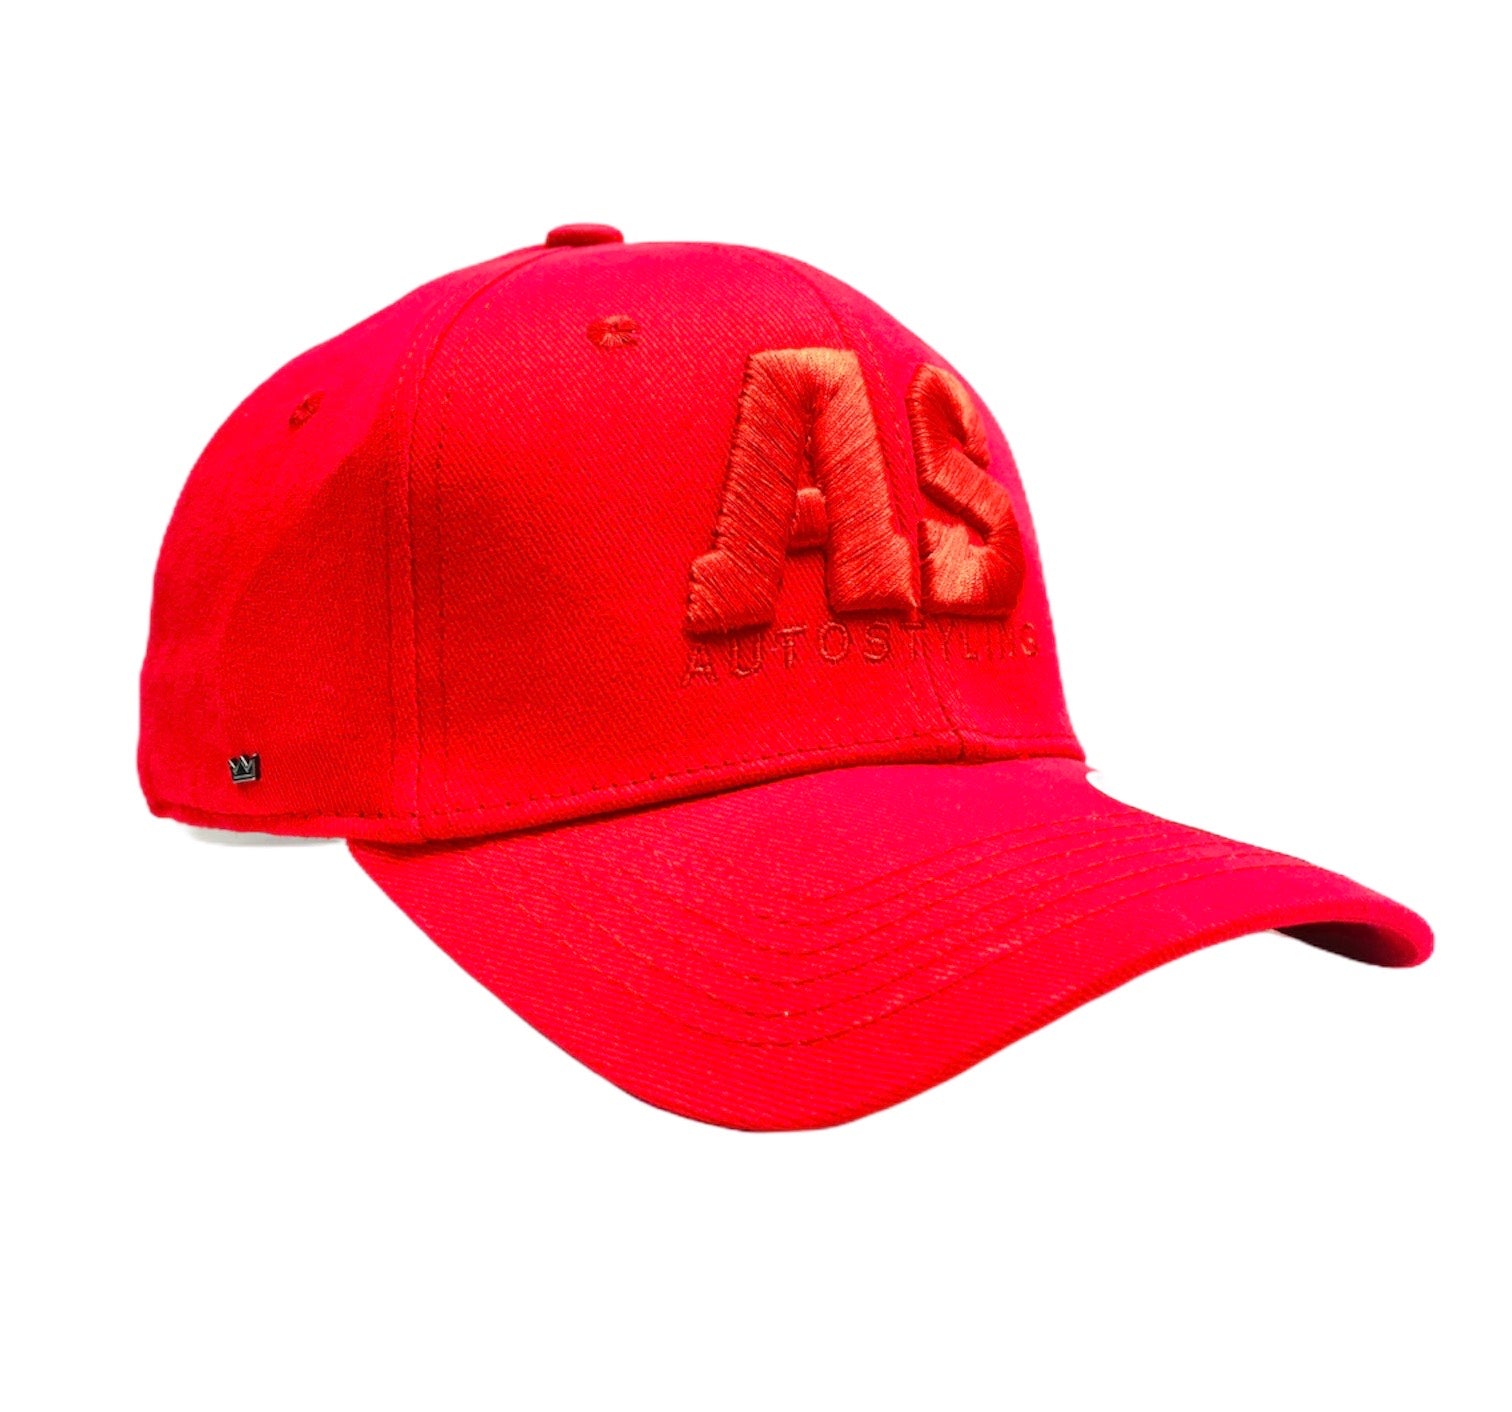 AUTOSTYLING BASEBALL CAP RED